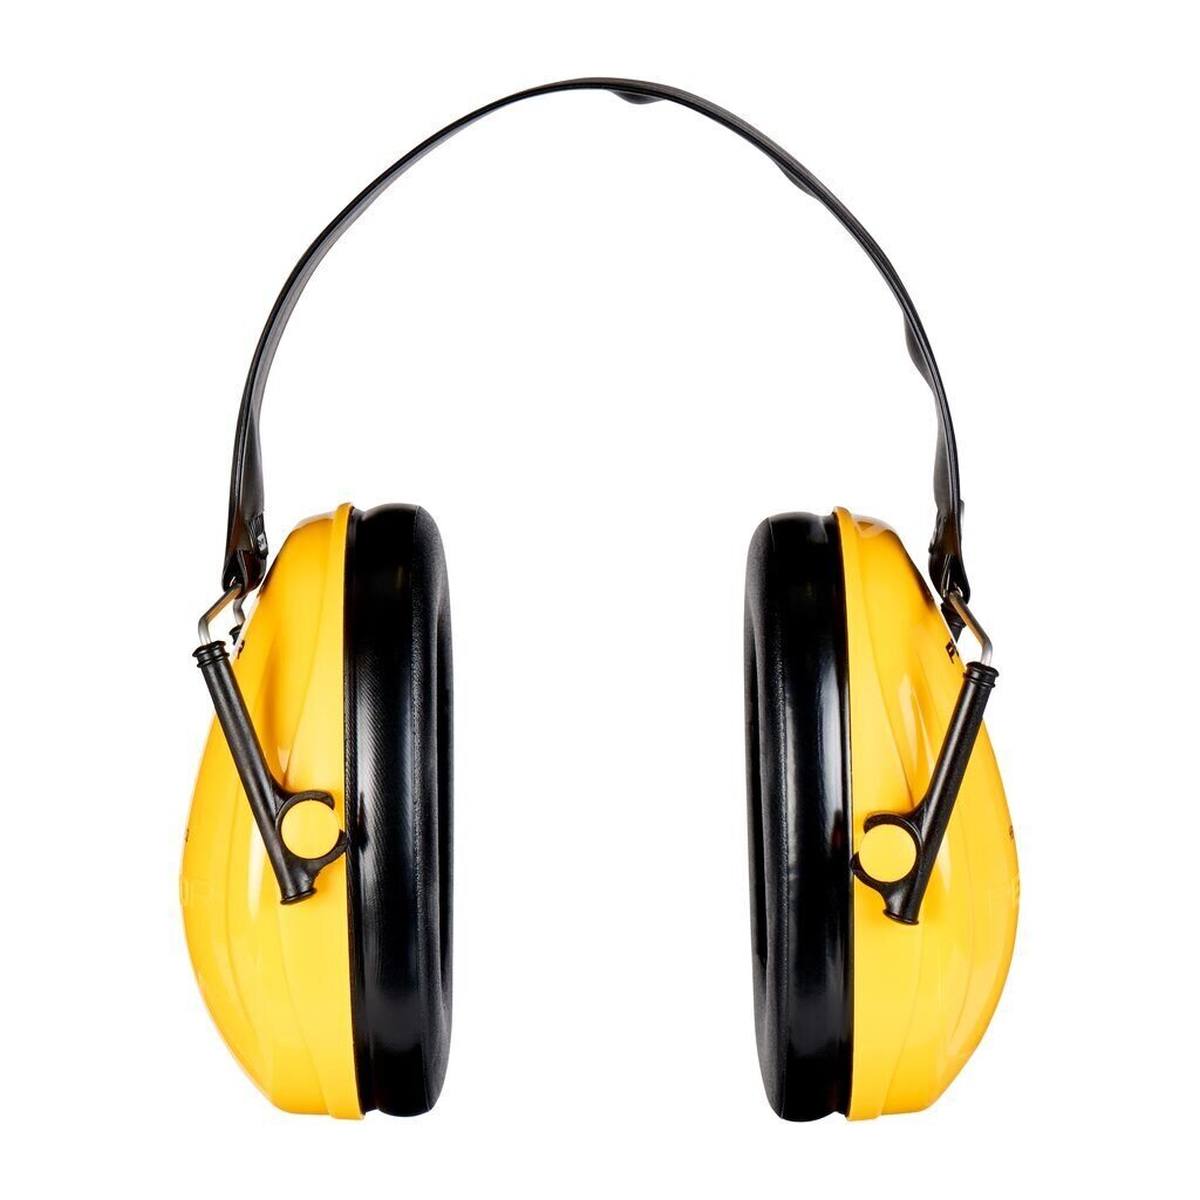 3M Peltor Optime I earmuffs, foldable earhook, yellow, SNR = 28 dB, H510F